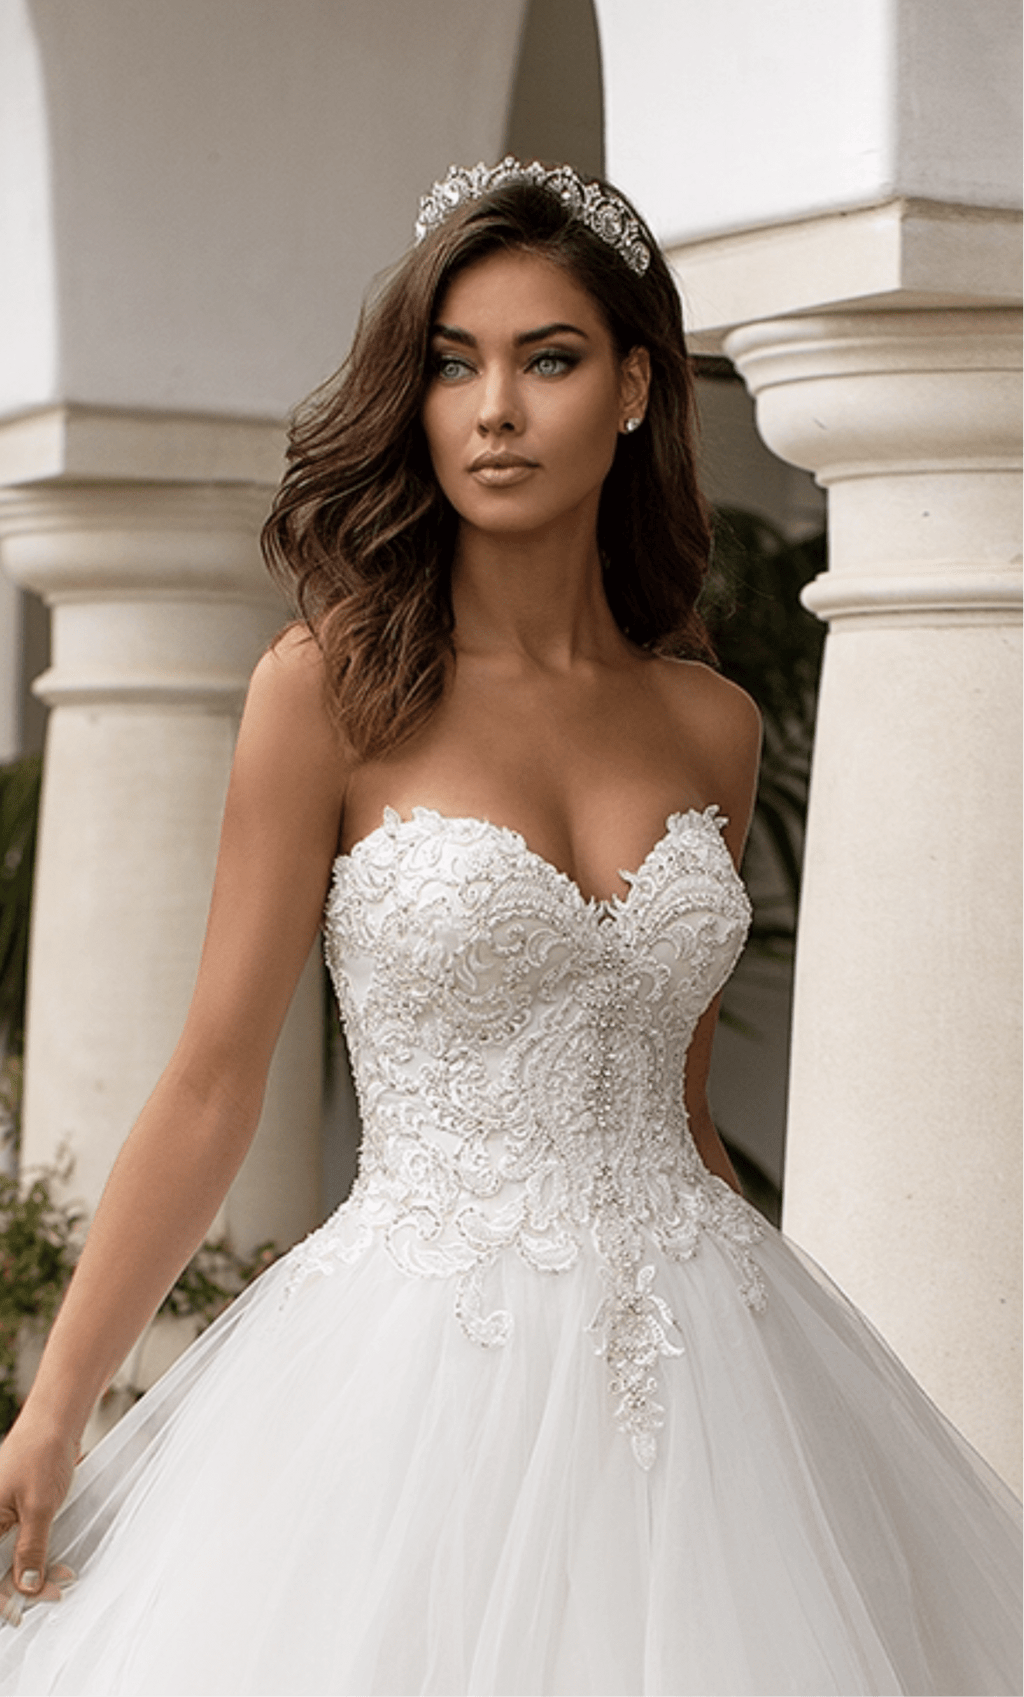 Stunning Long Sleeve Jewel Crystal Beaded Ball Gown Wedding Dresses | Ball gowns  wedding, Disney wedding dresses, Ball gown wedding dress